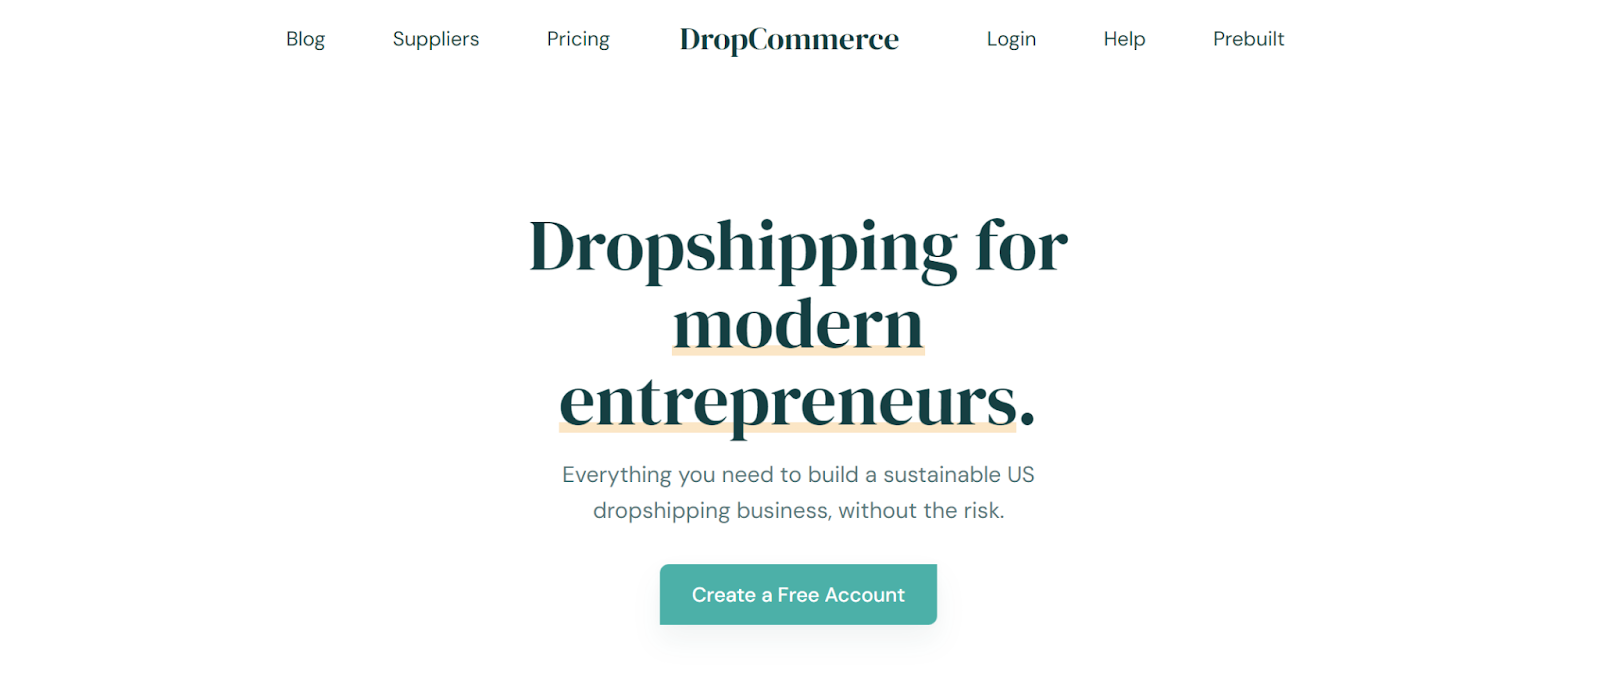 DropCommerce's landing page headline "Dropshipping for modern entrepreneurs."